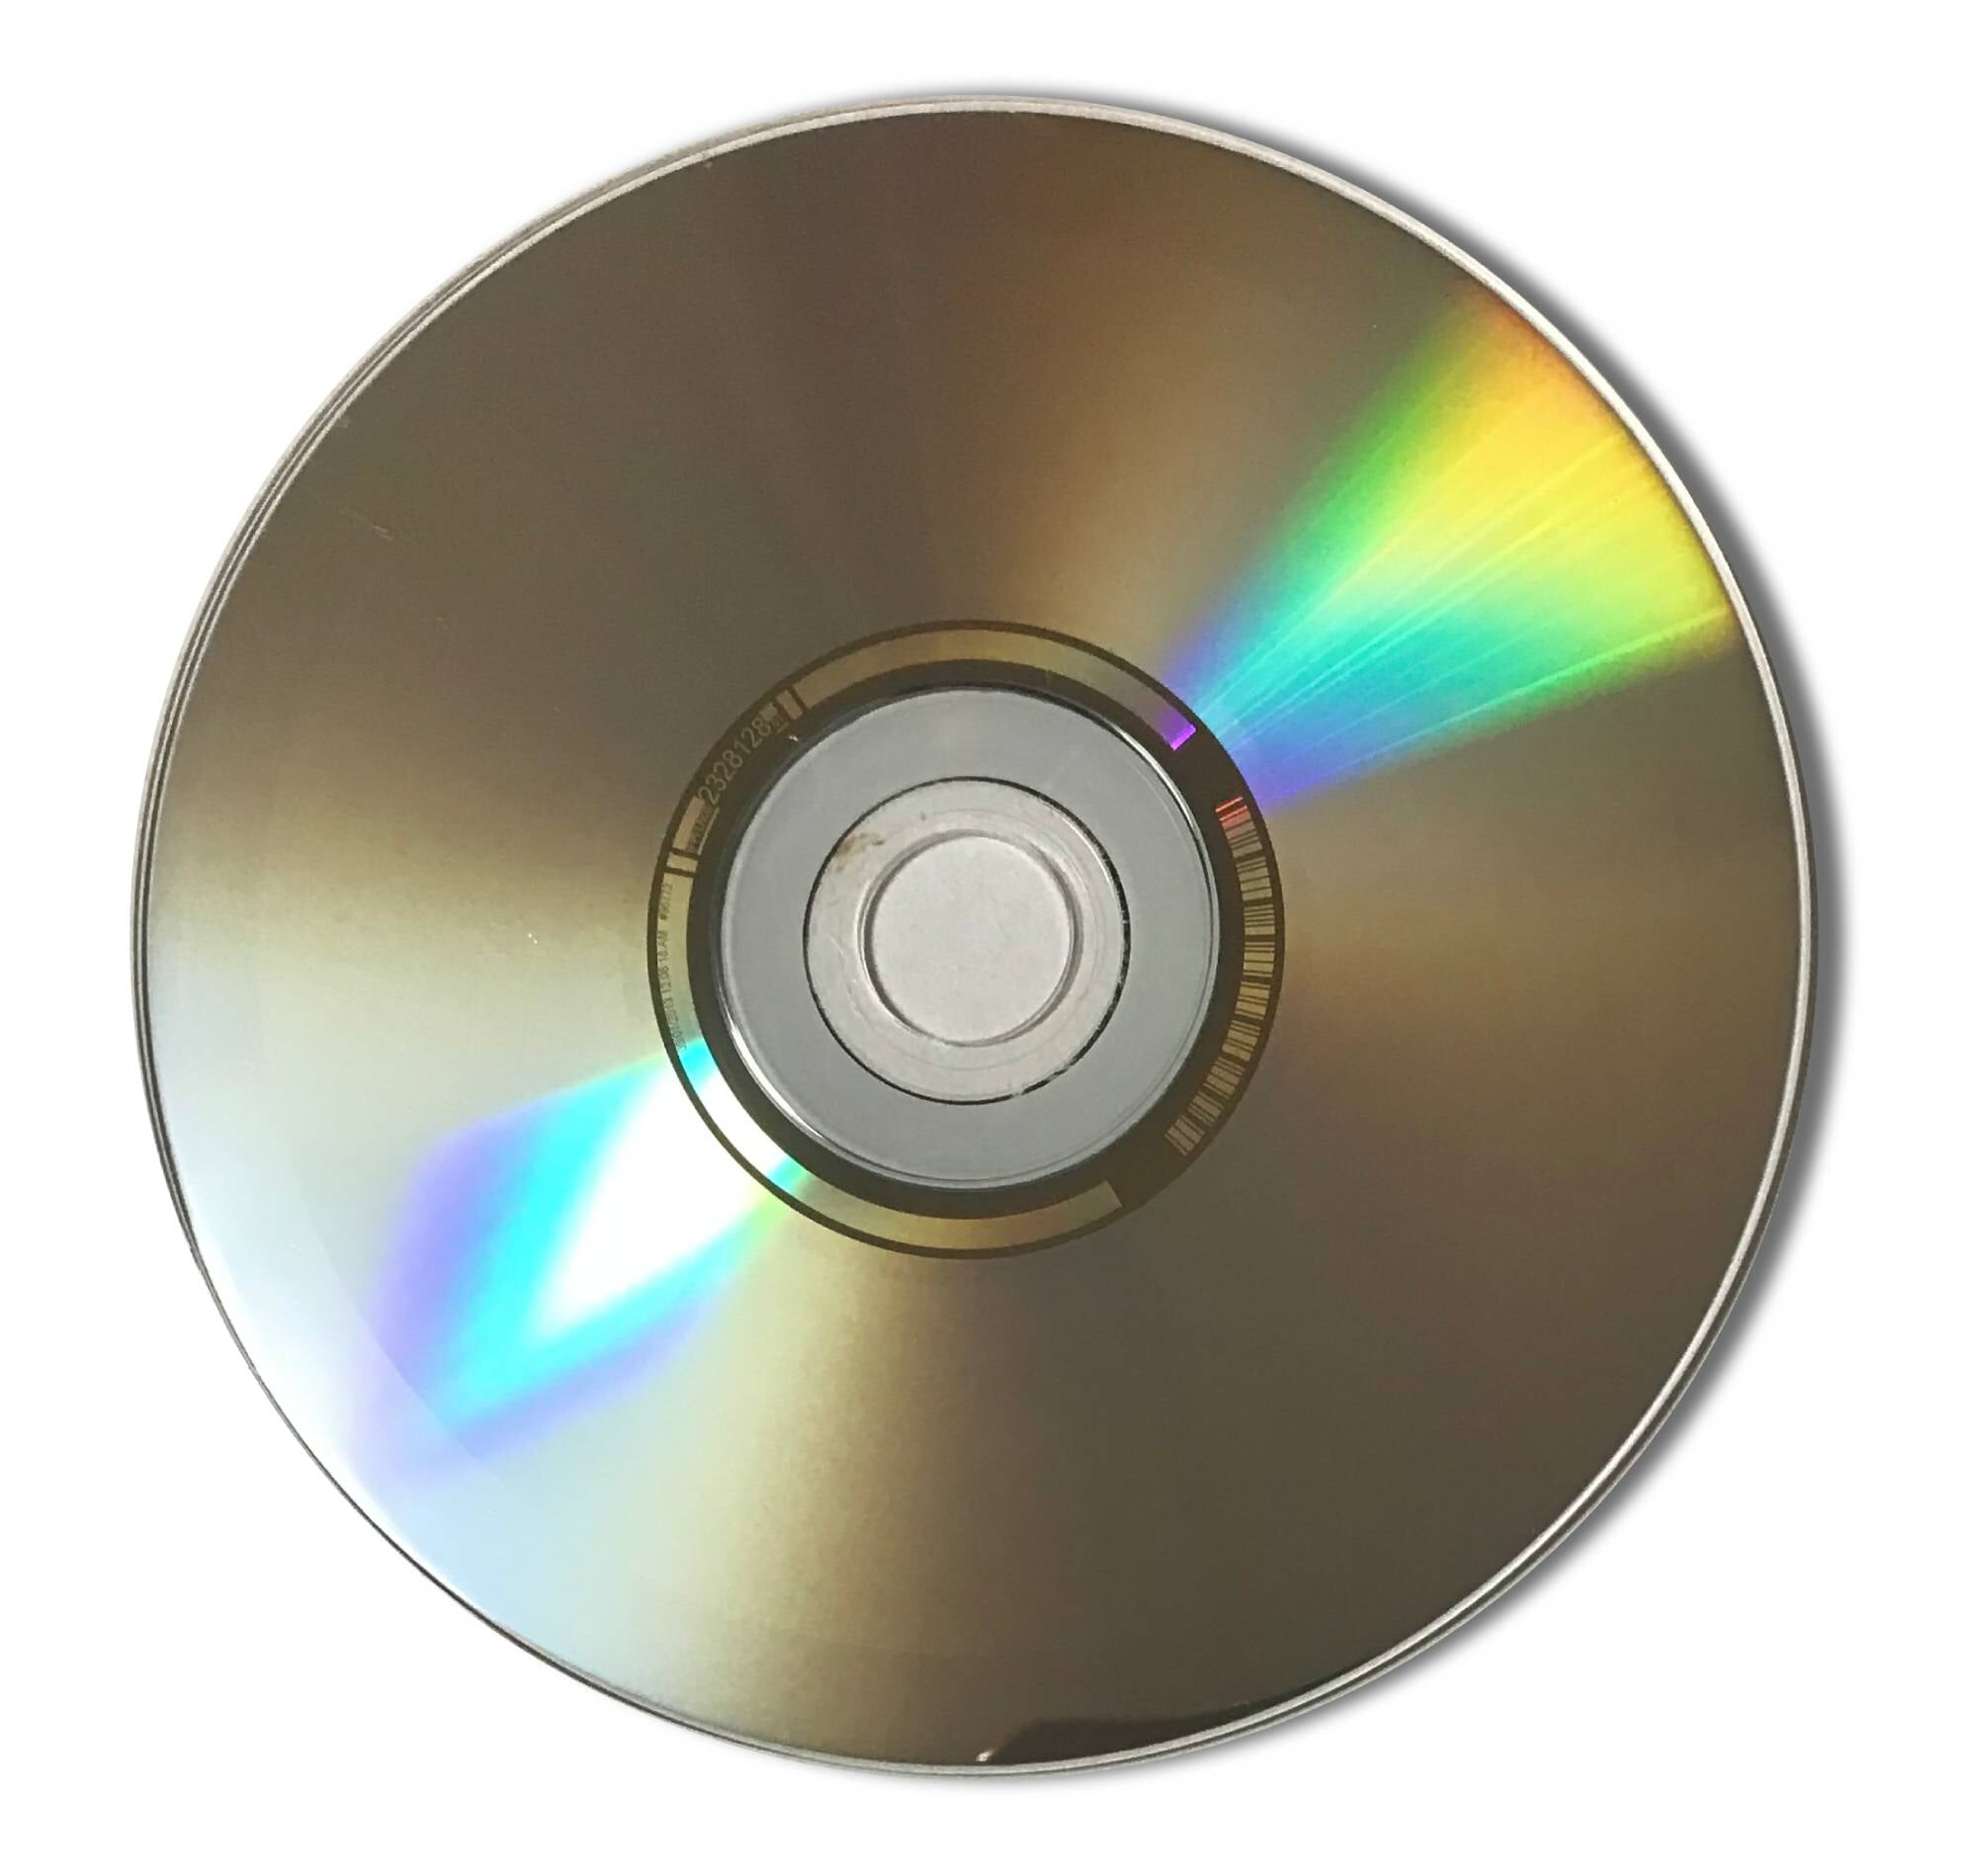 Scanner - Hypertrace (USA CD 2013년 재발매)